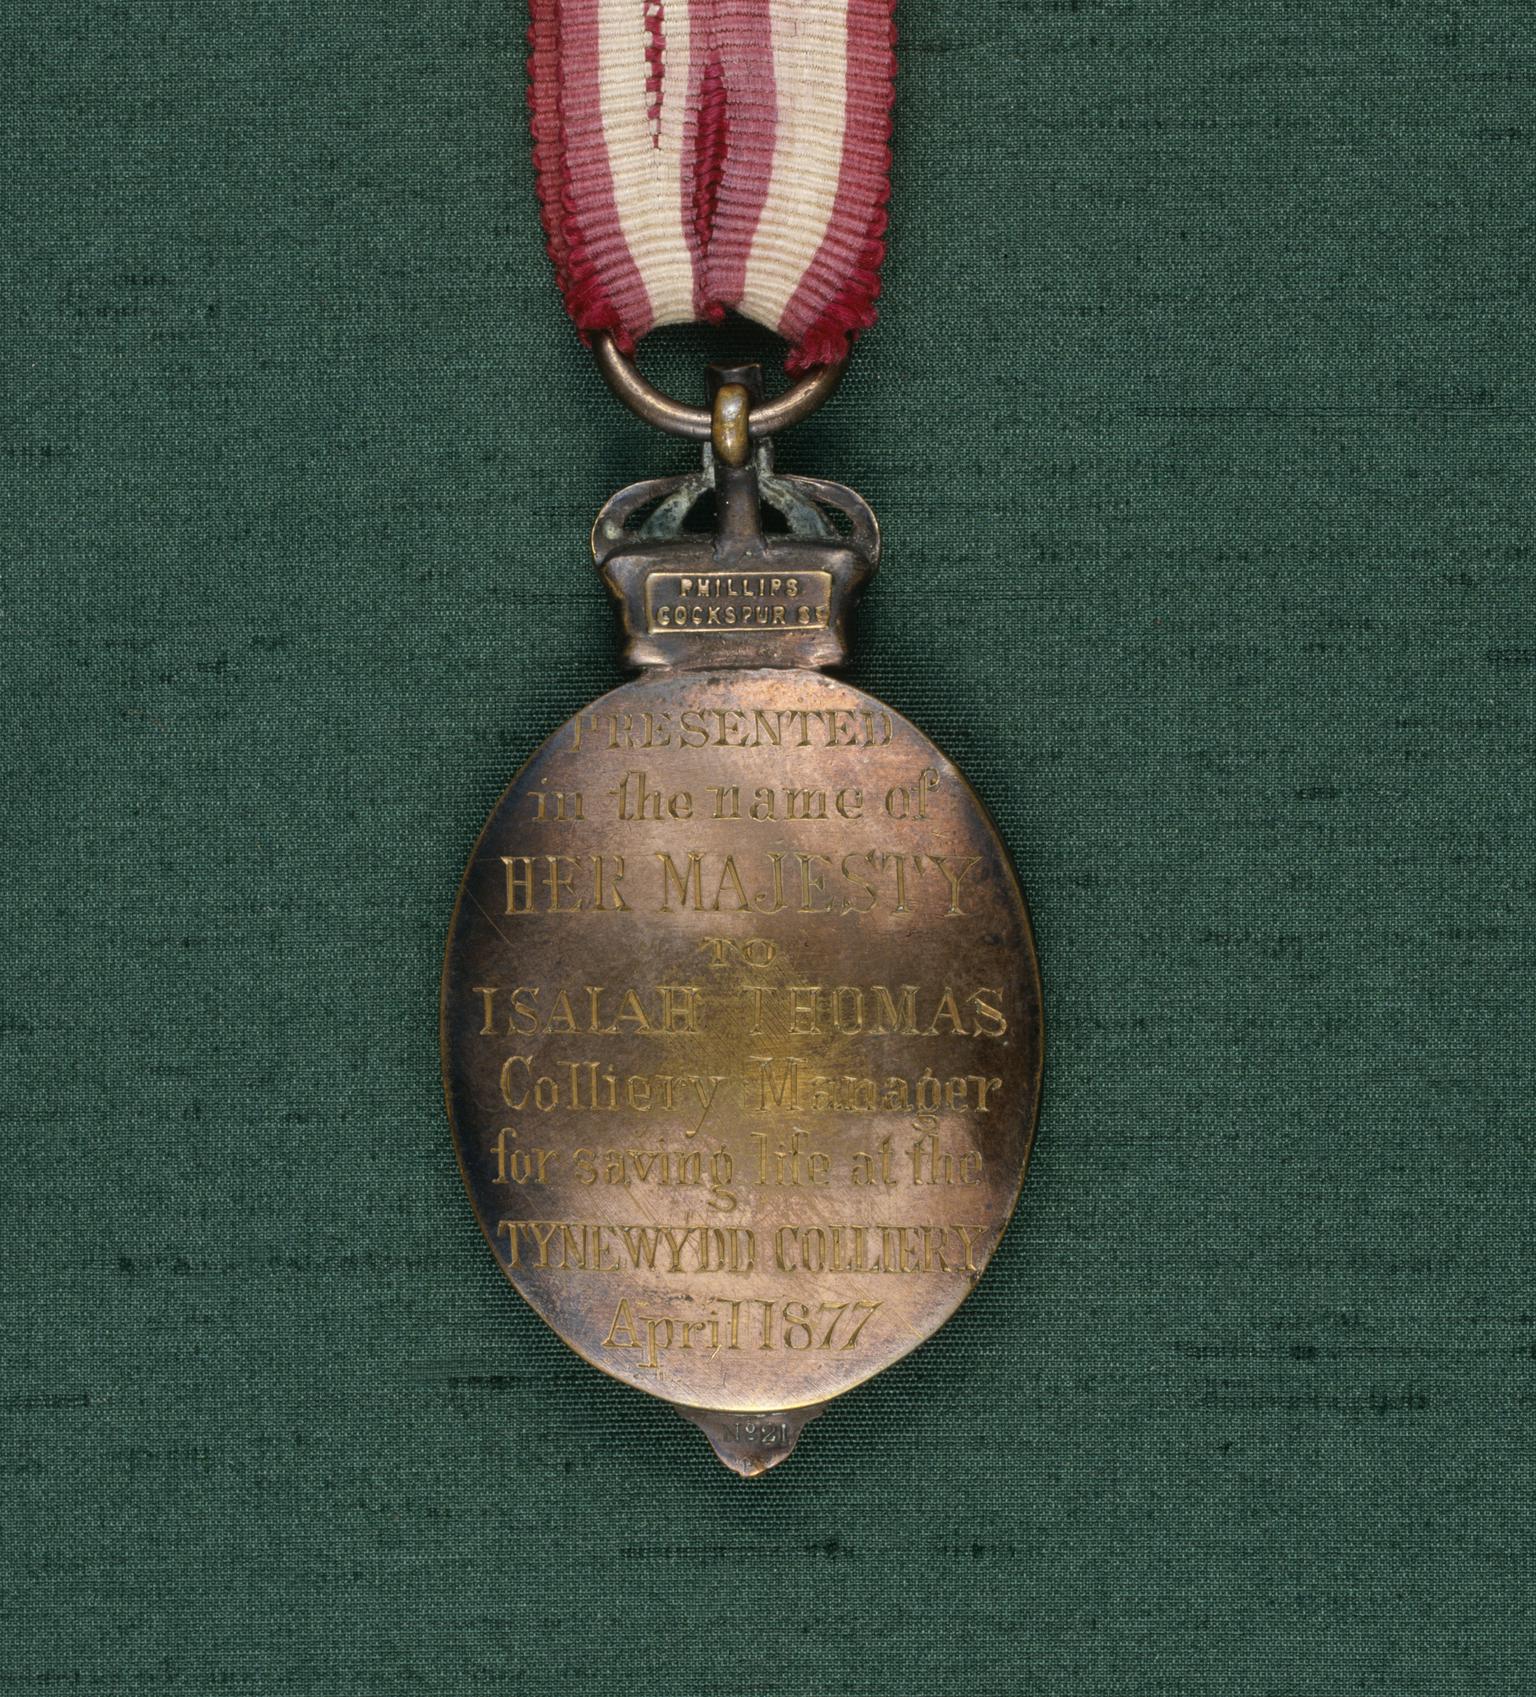 Albert Medal, bronze, presented to Isaiah Thomas